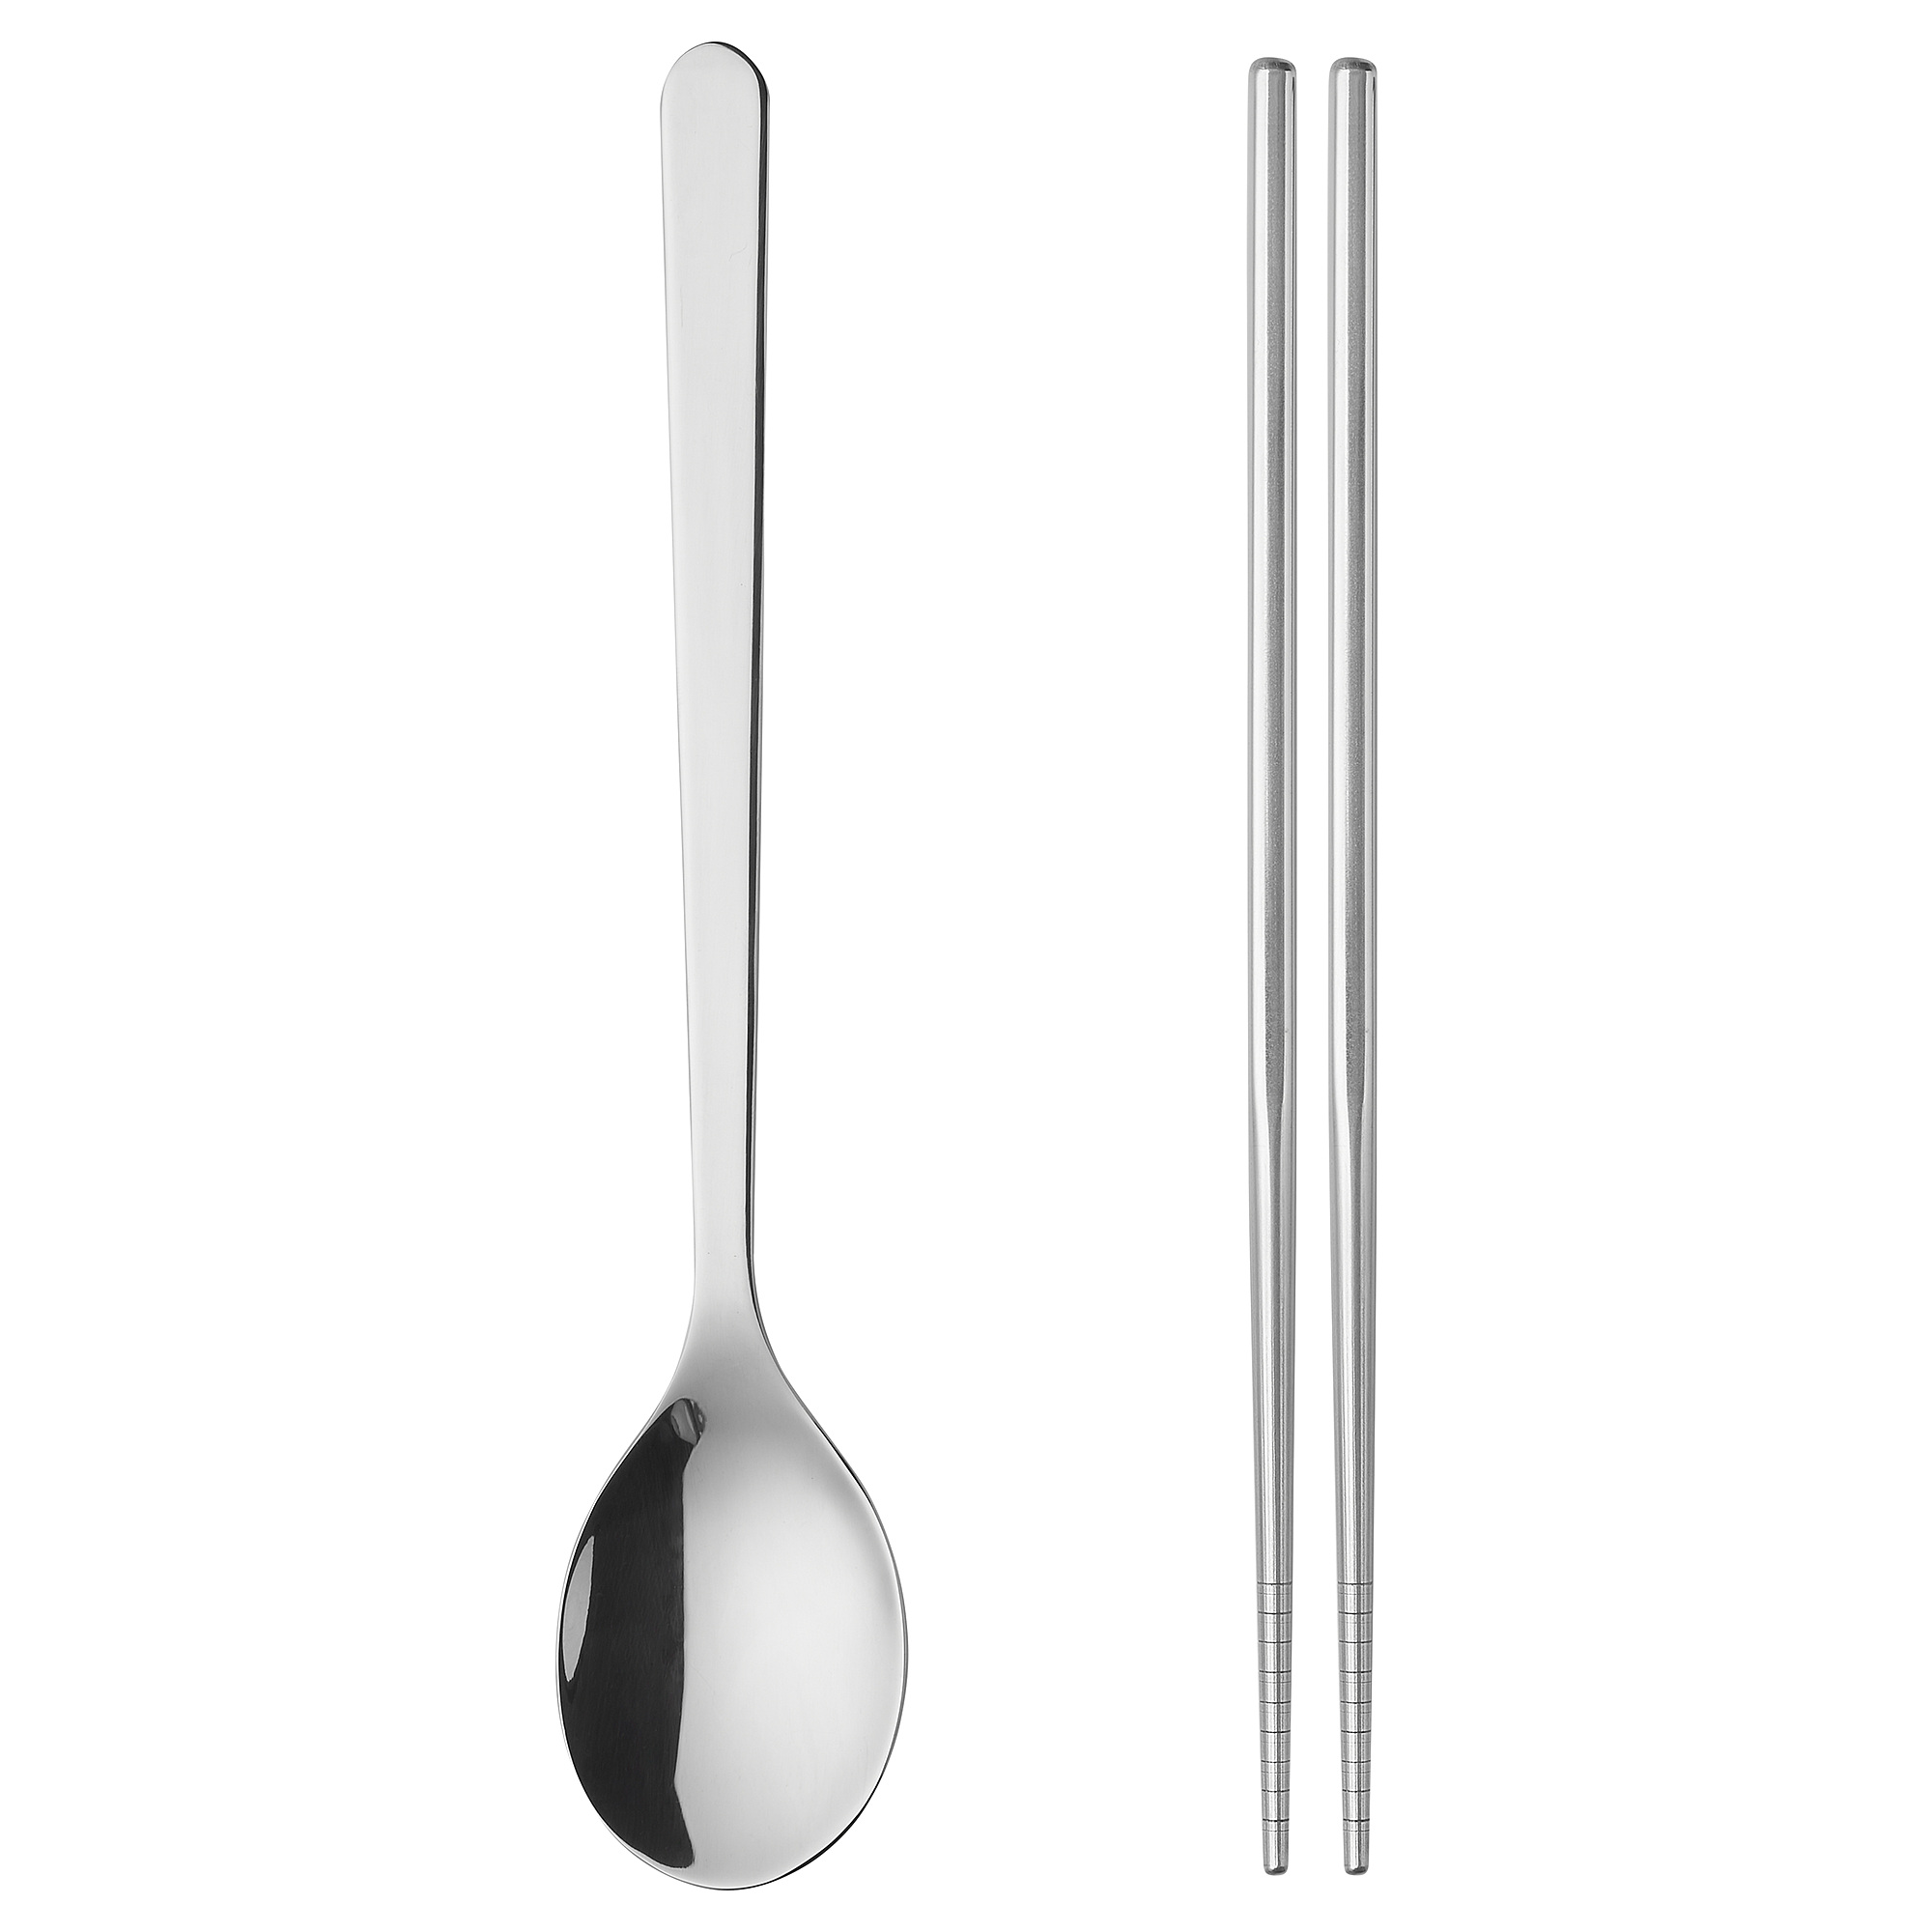 GRÅSELLACK 2-piece cutlery set